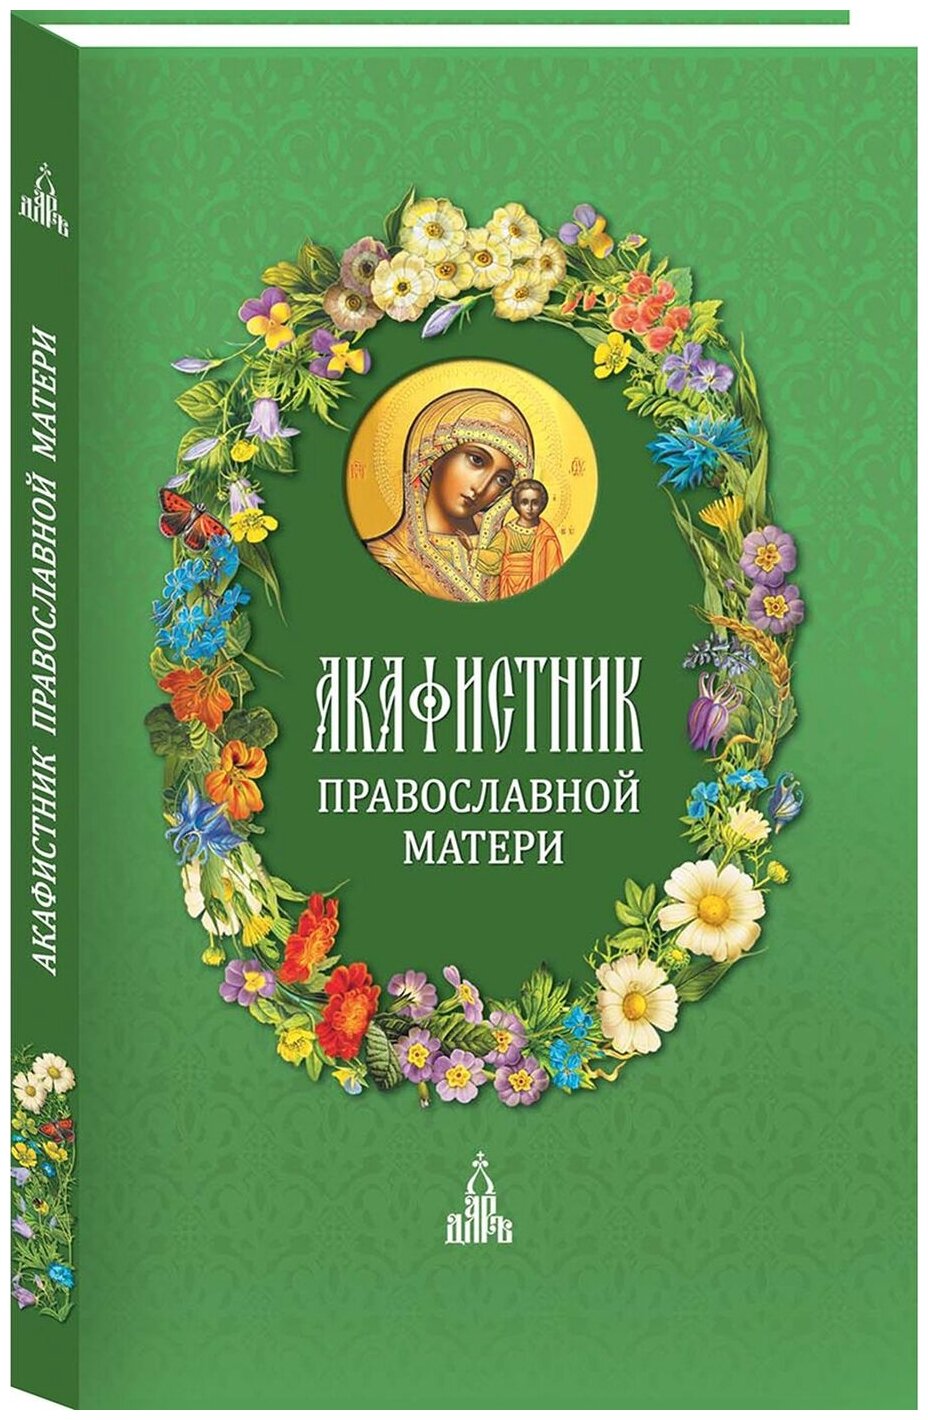 Акафистник православной матери, 3-е изд. - фото №1